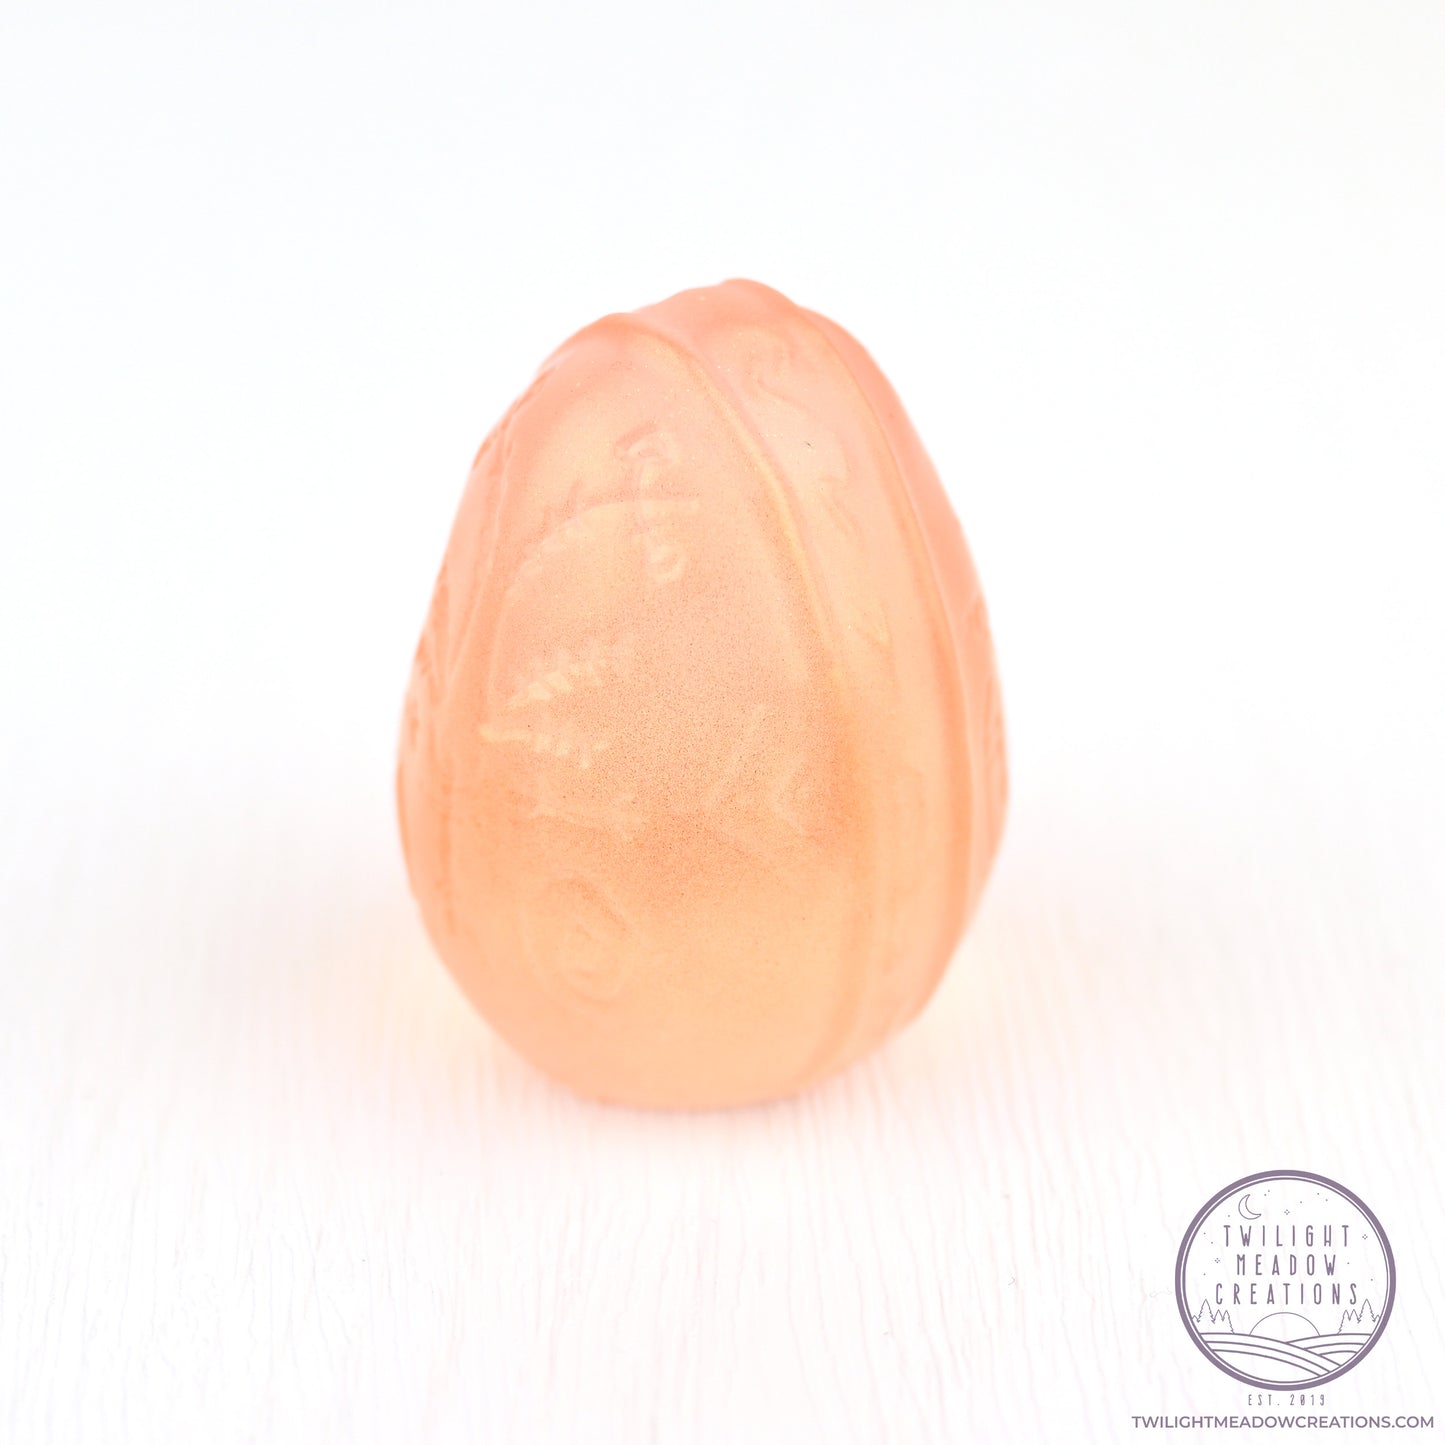 Crystalline Small Rune Egg (Firmness: Medium)